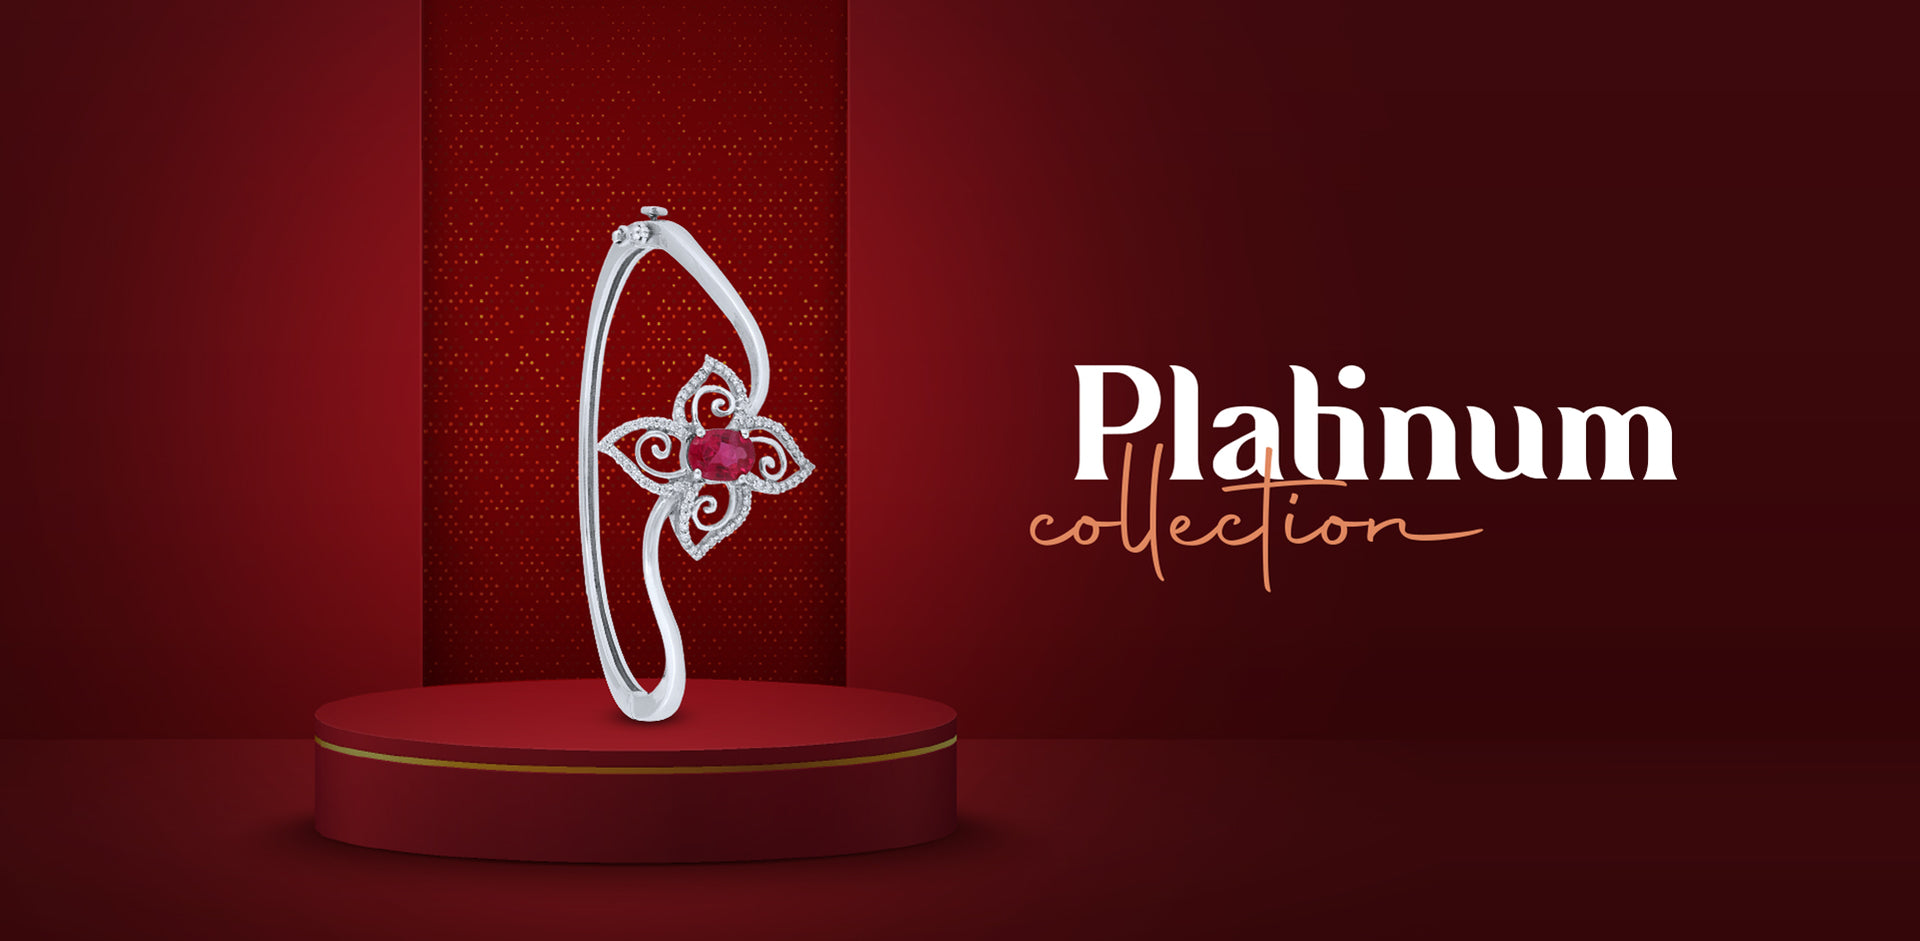 Platinum Jewellery in chennai, Best Jewellers in chennai, Top Jewellers in chennai, Jewellery shops in chennai